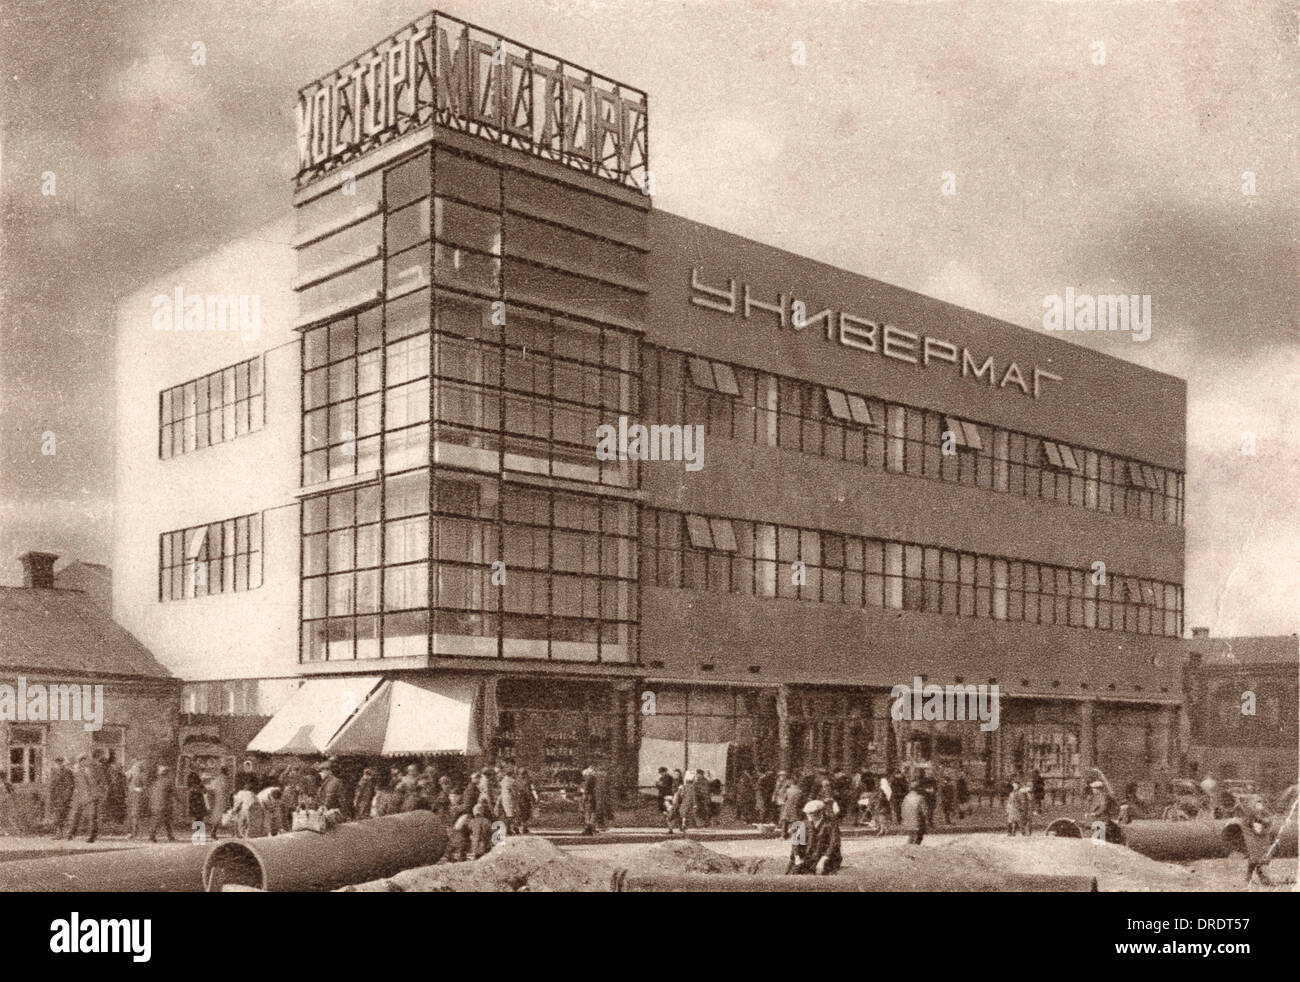 Mostorg Department Store, Mosca, Unione Sovietica Foto Stock